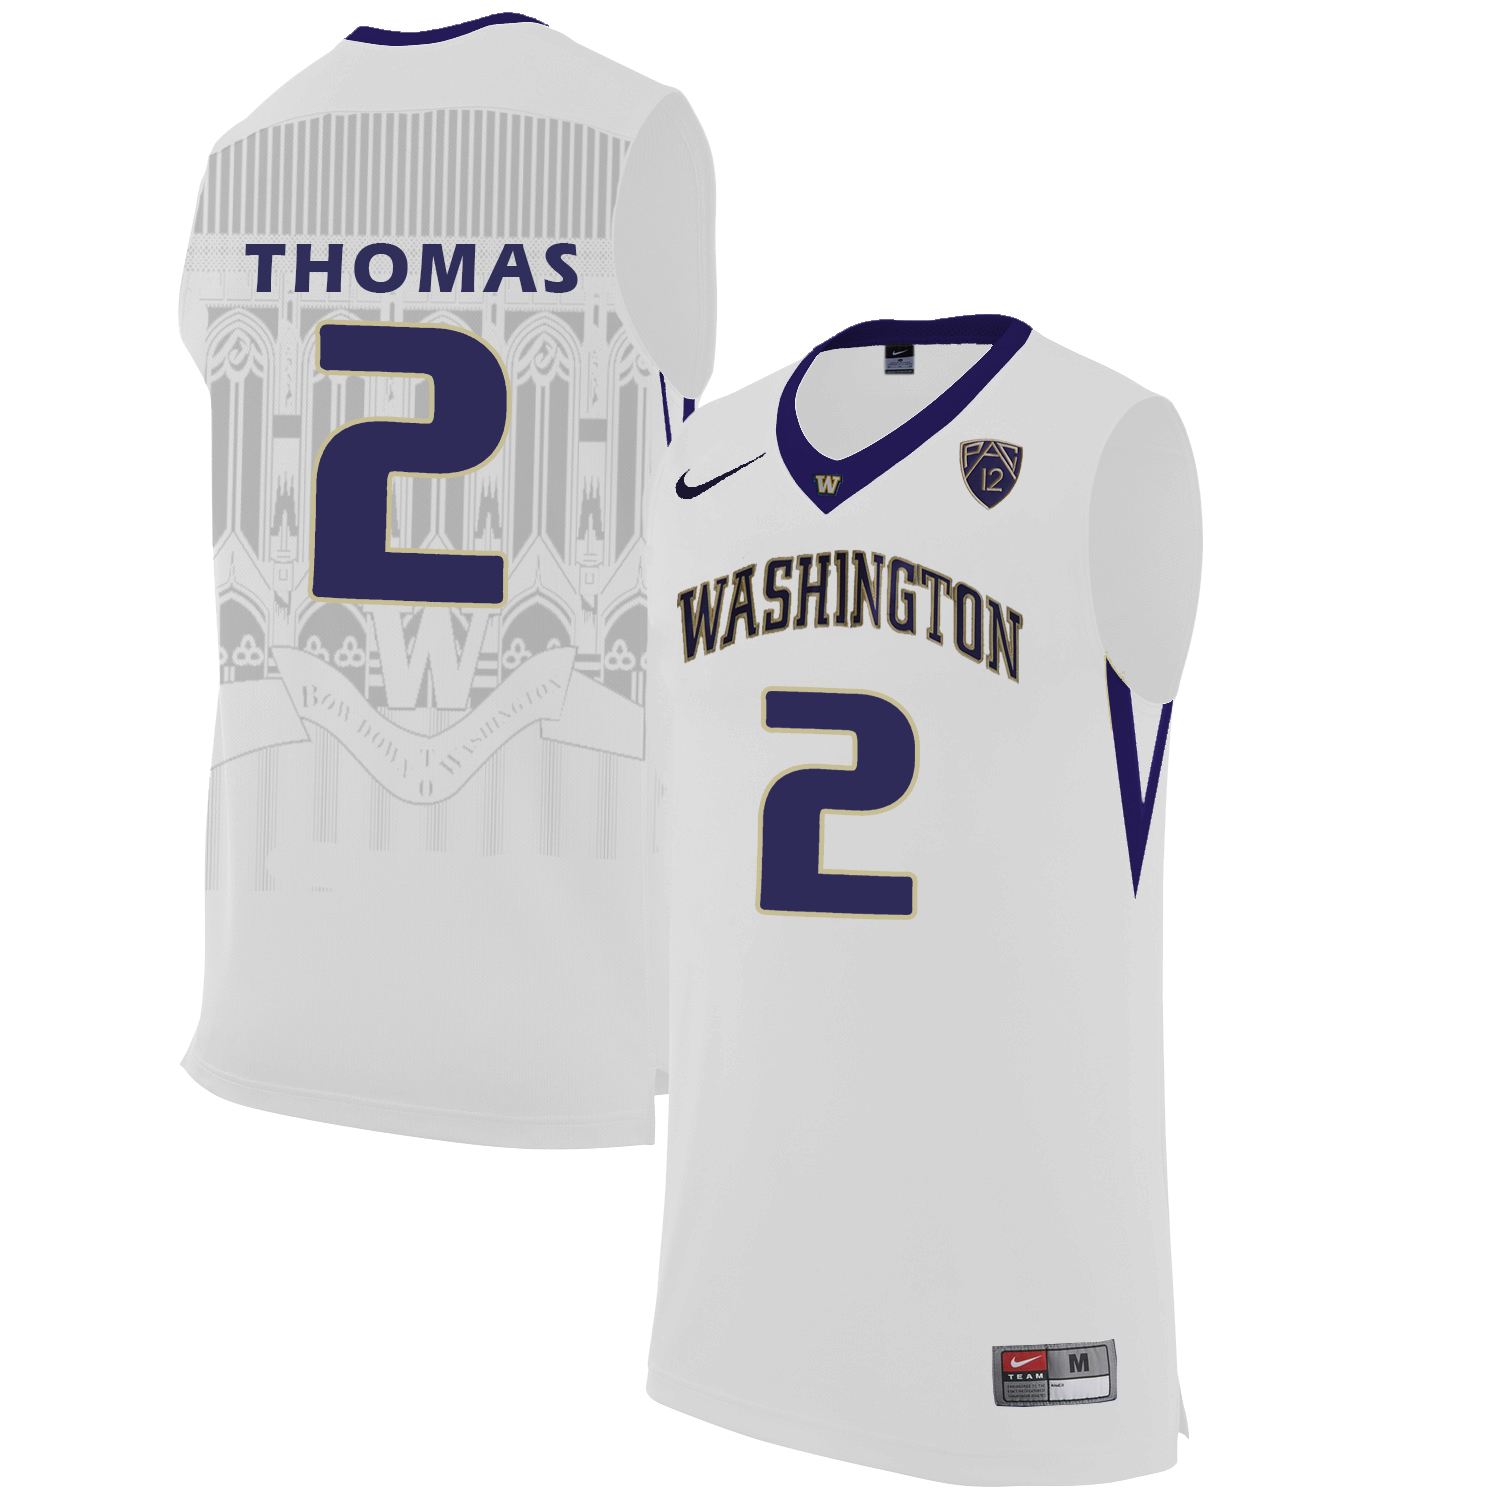 Washington Huskies 2 Isaiah Thomas White College Basketball Jersey